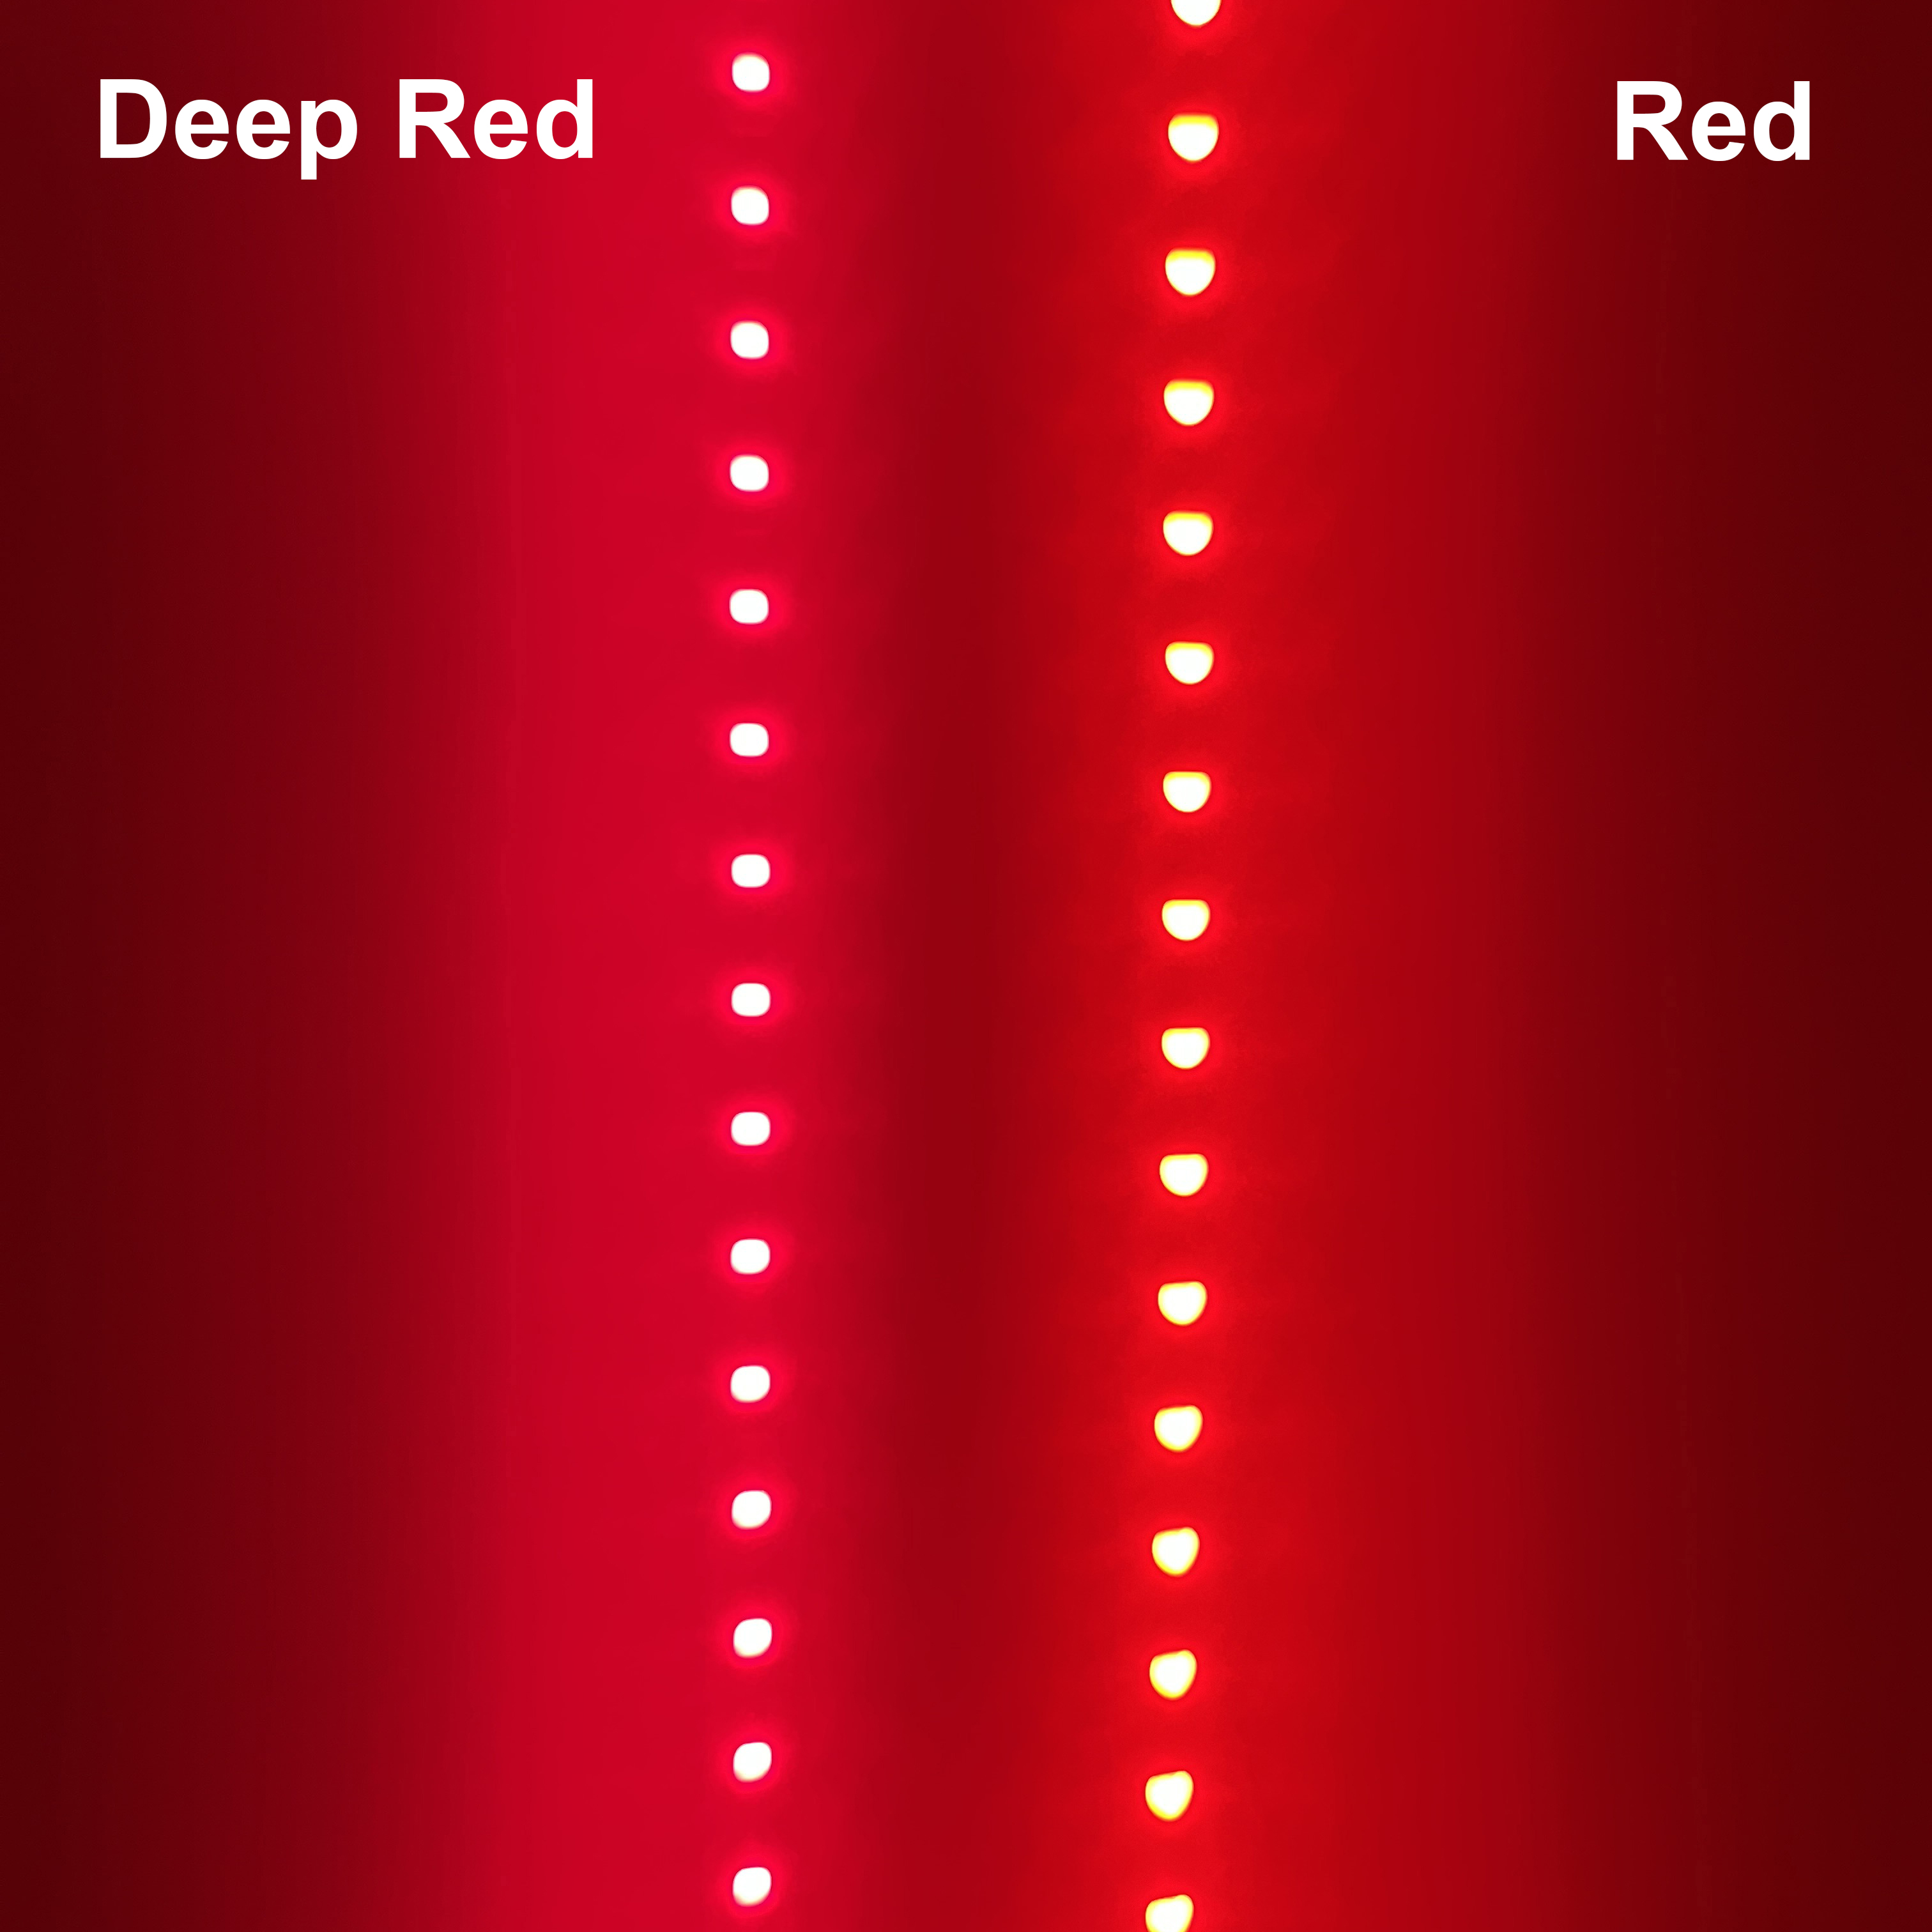 Quad Chip Plus Deep Red vs Quad Chip red color